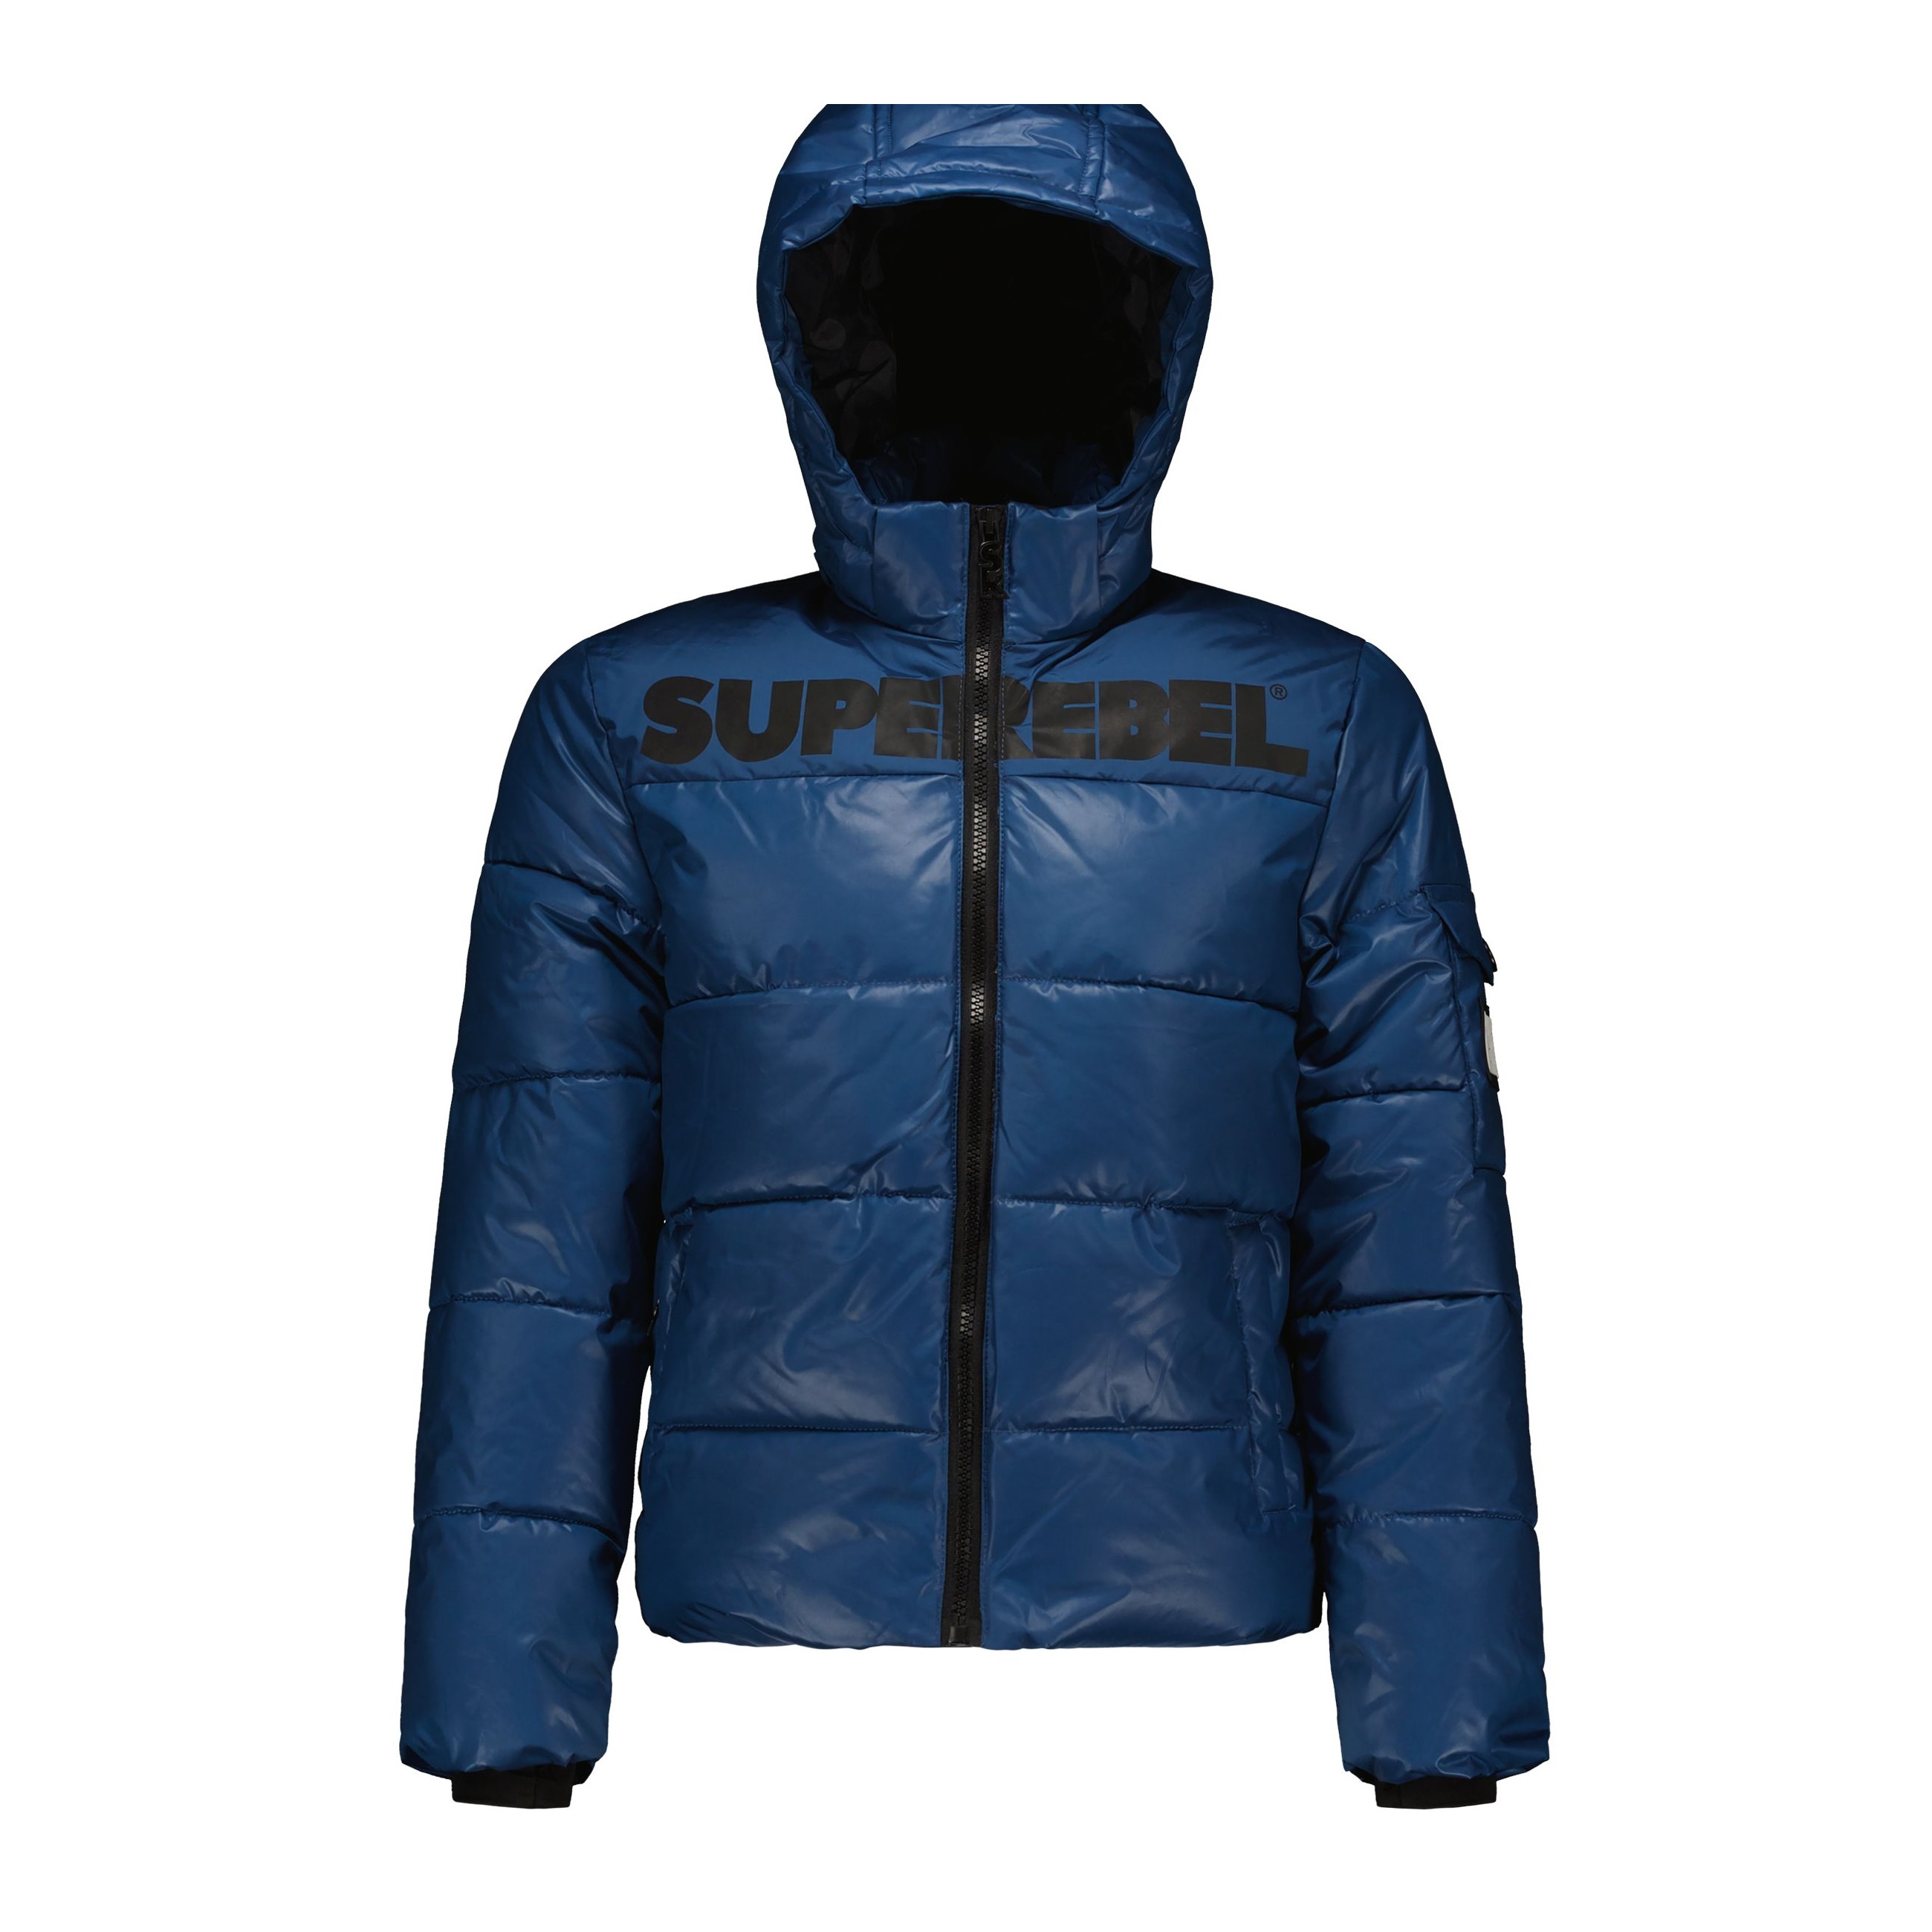  Ski & Snow Jackets -  superrebel HUNTER Jacket